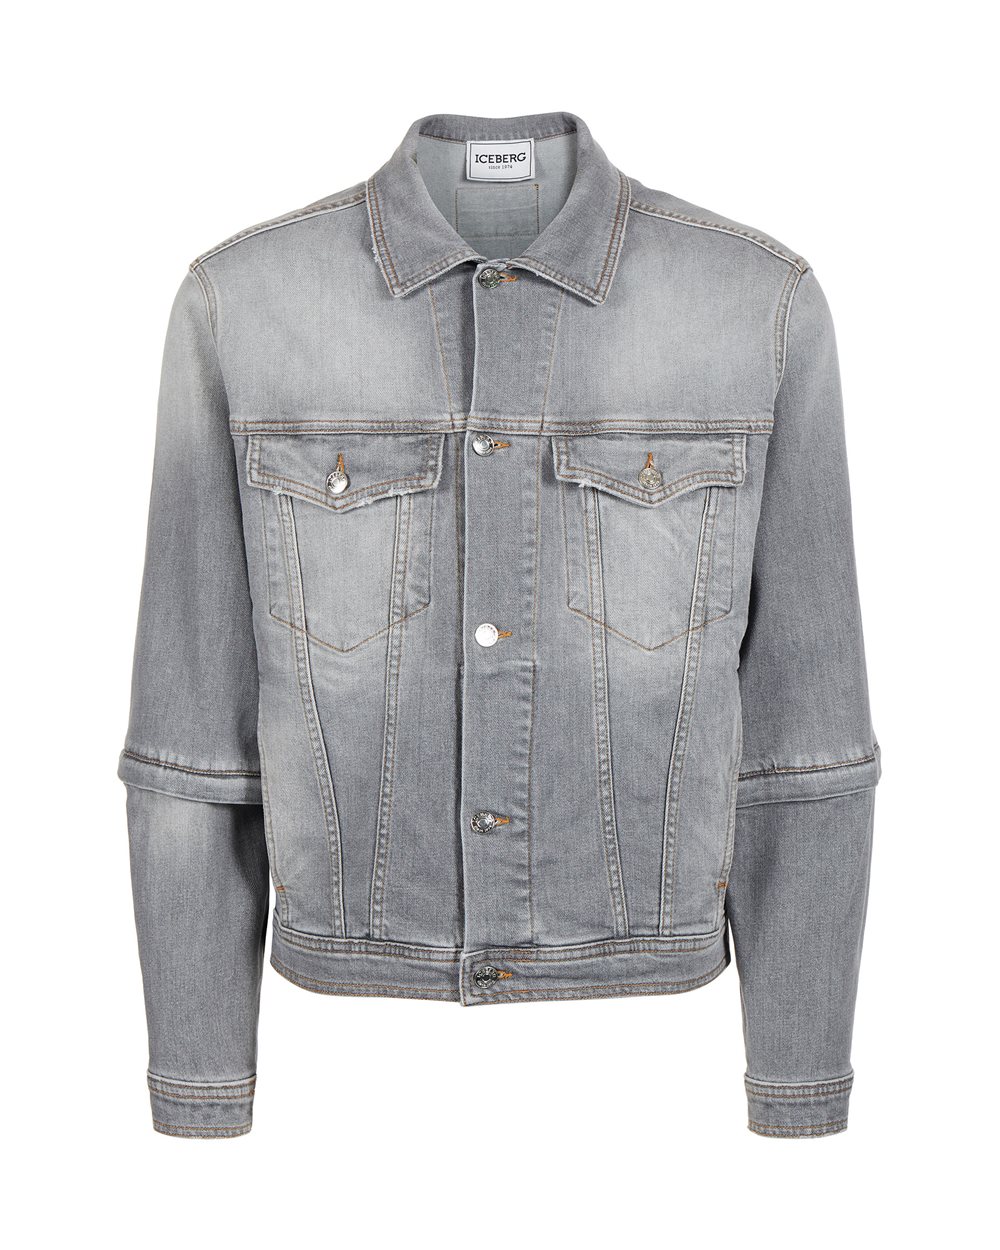 Giubbotto in jeans con logo - Abbigliamento | Iceberg - Official Website